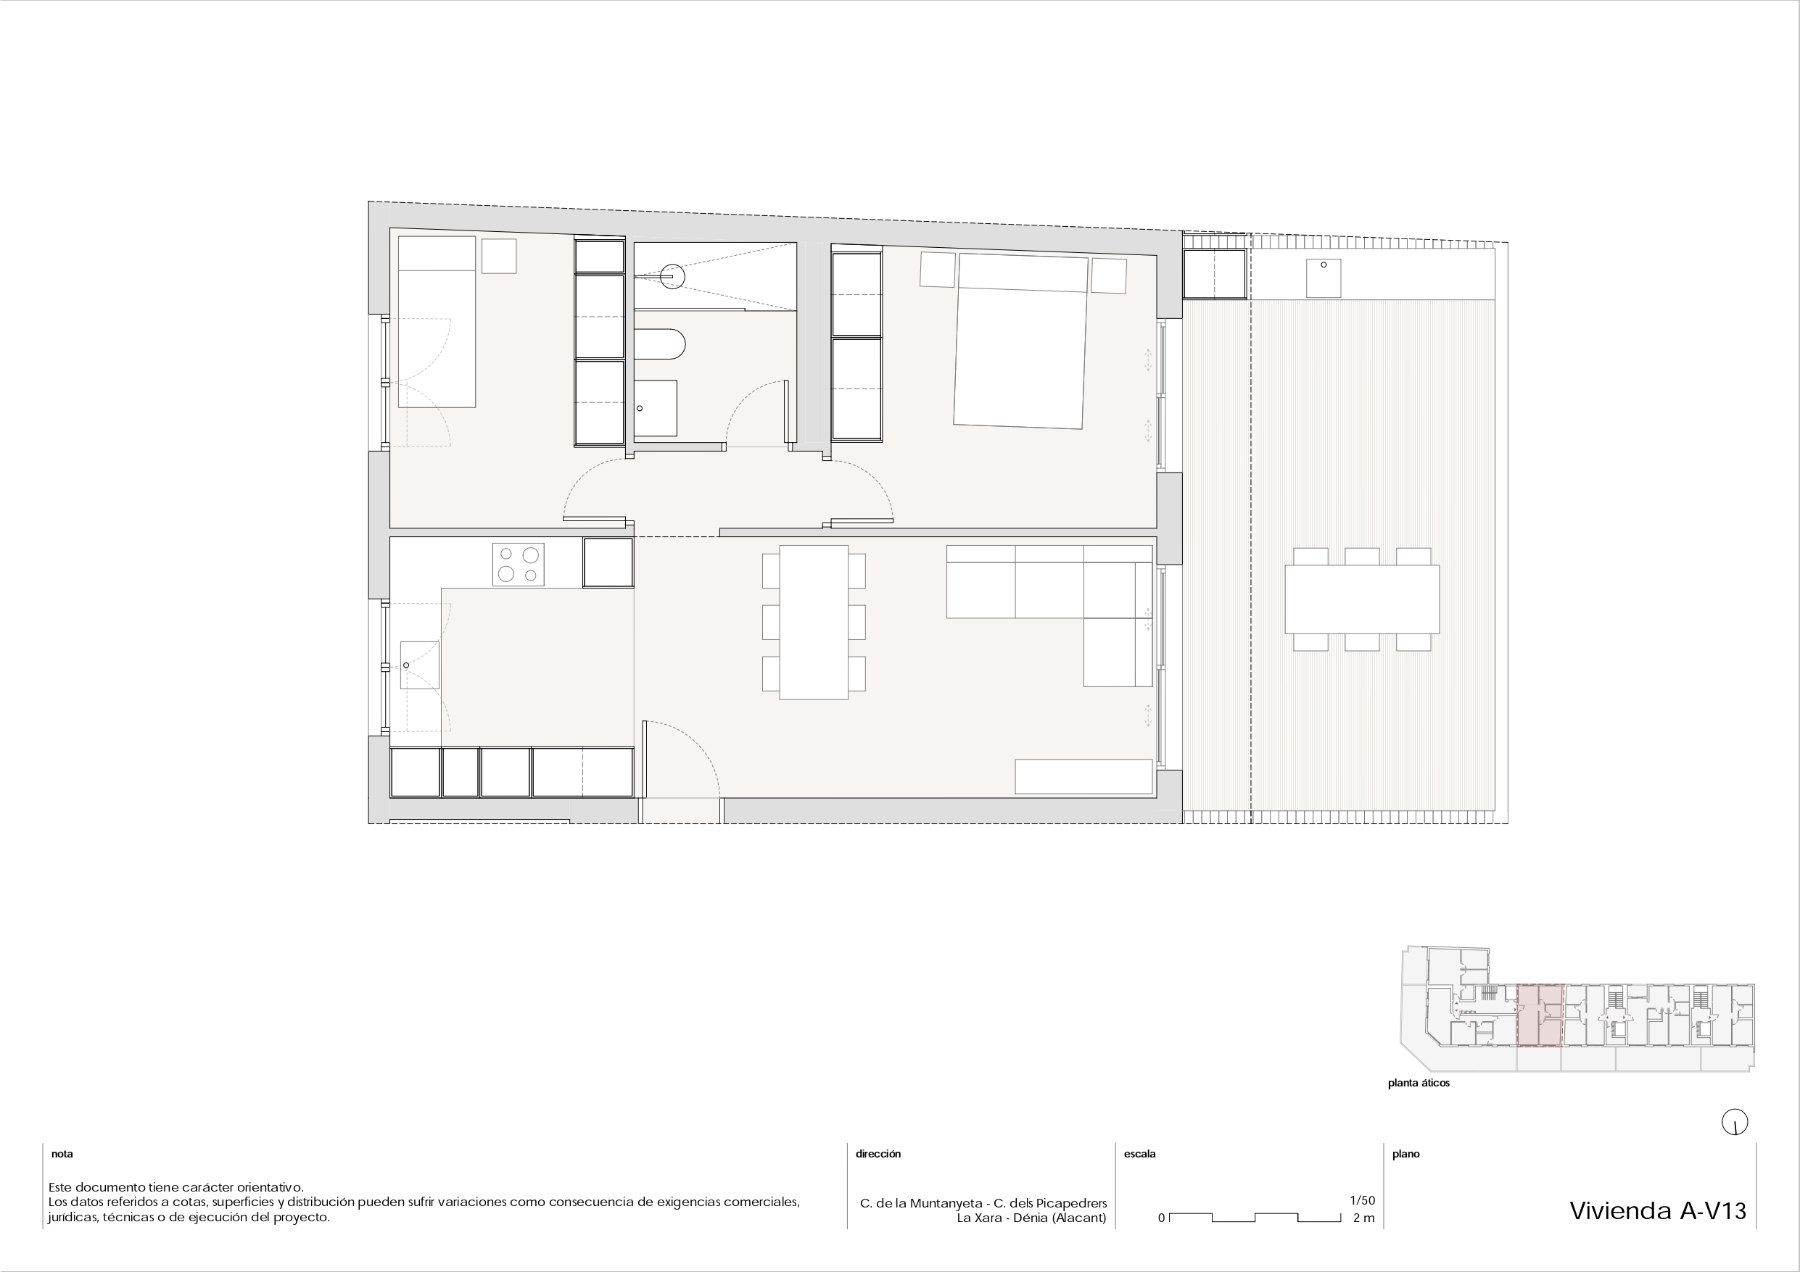 Penthouse for sale in La Xara (Residencial Muntanyeta) - 2 Bedrooms